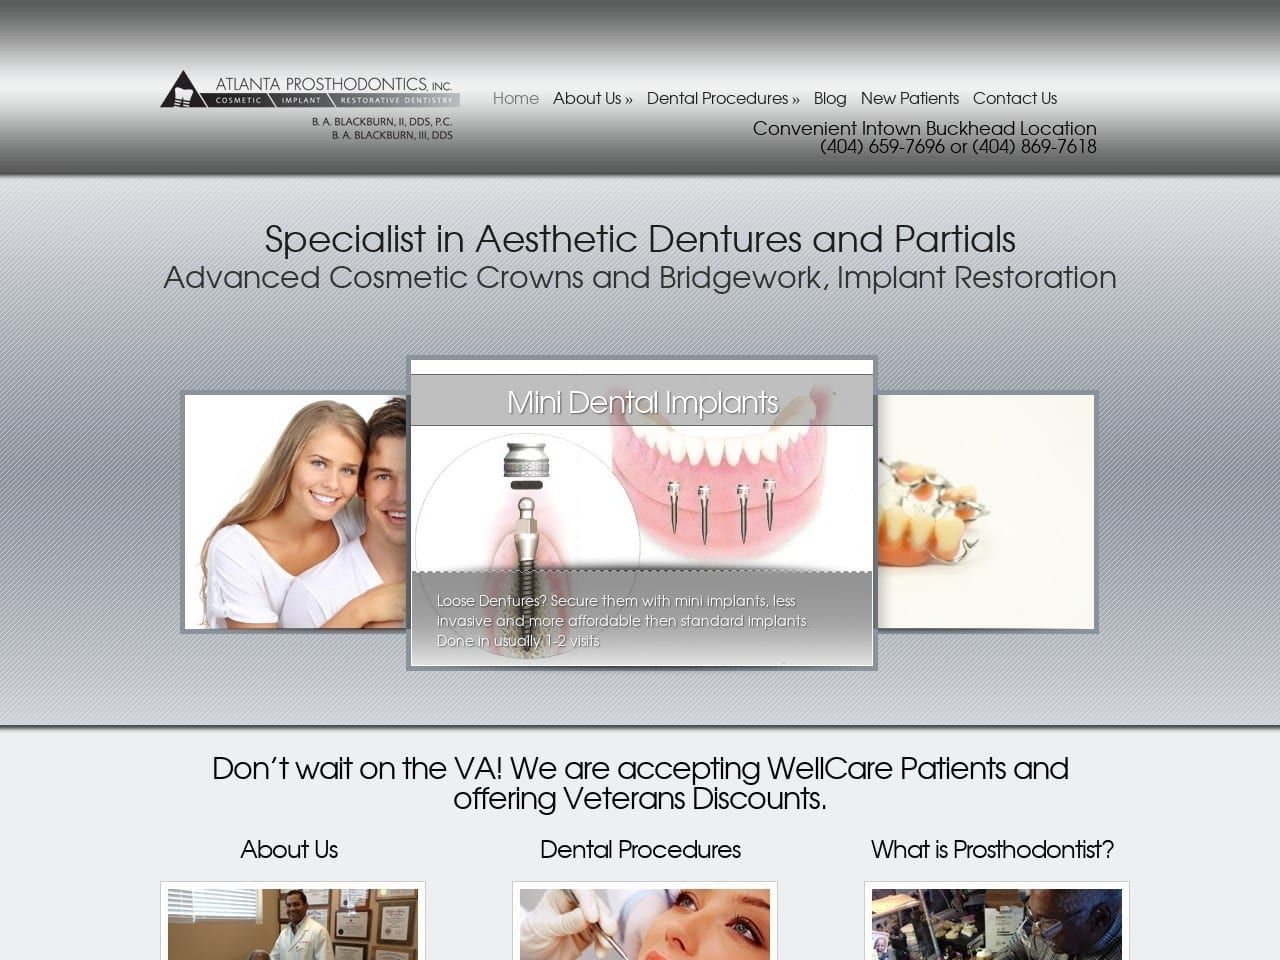 Atlanta Prosthodontics Website Screenshot from atlantaprosthodontics.com